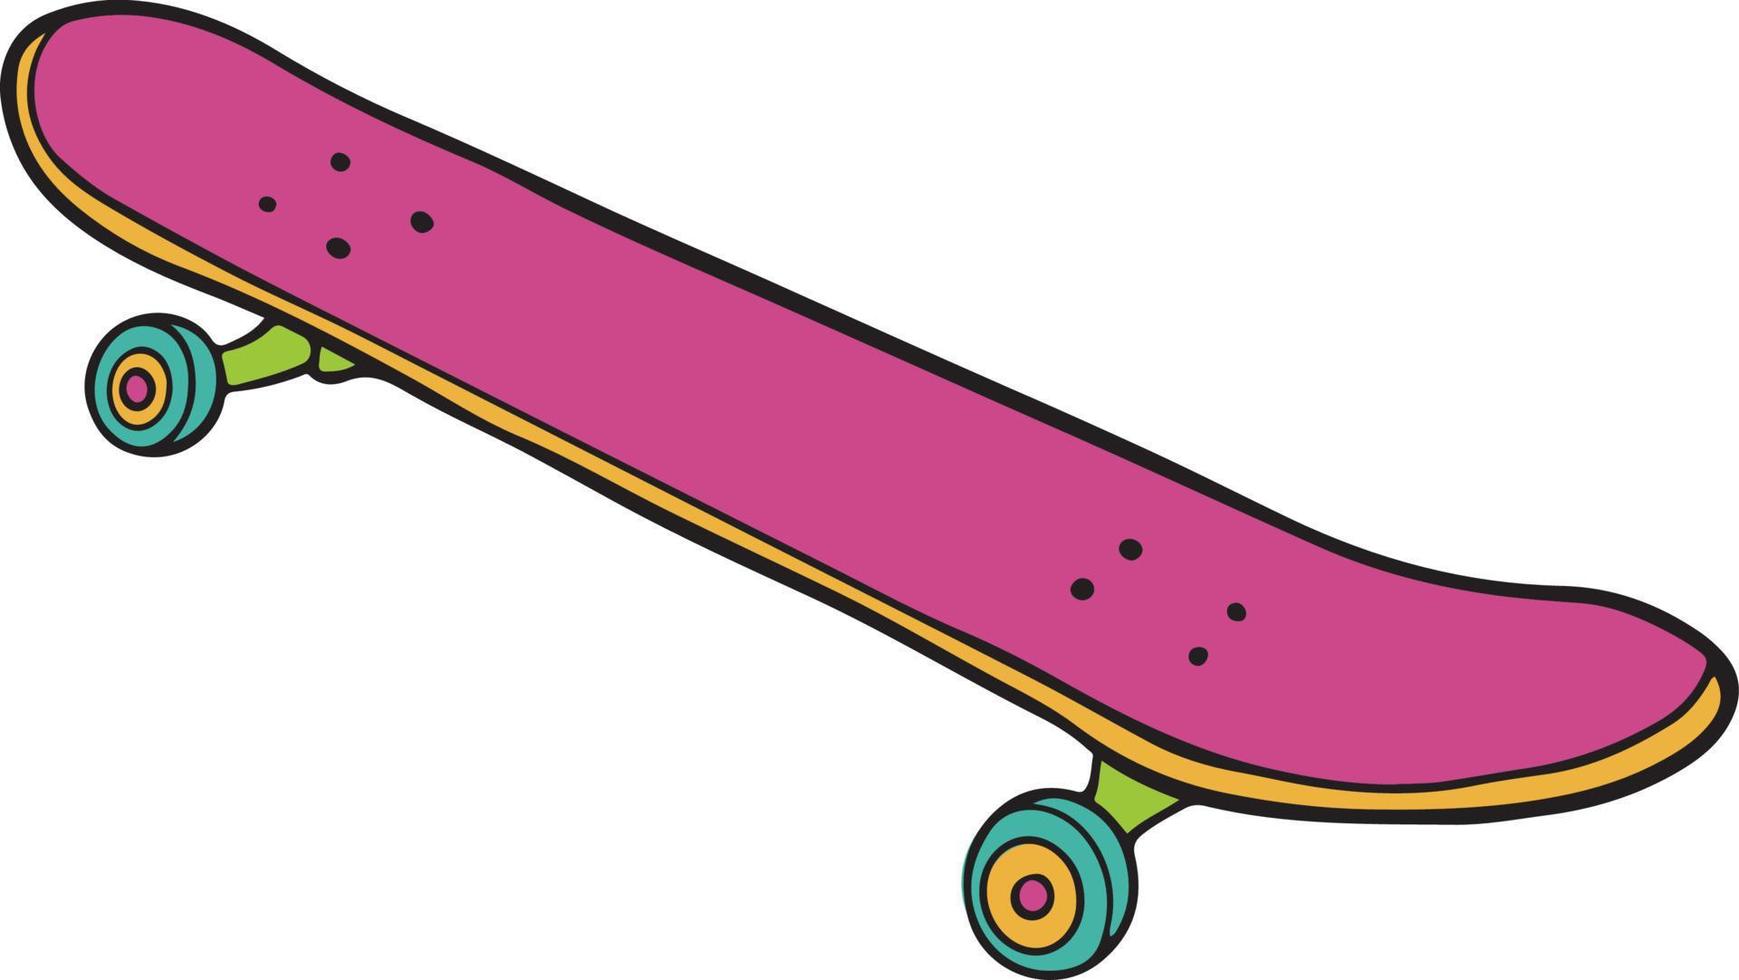 Skateboard hand drawn illustration vector